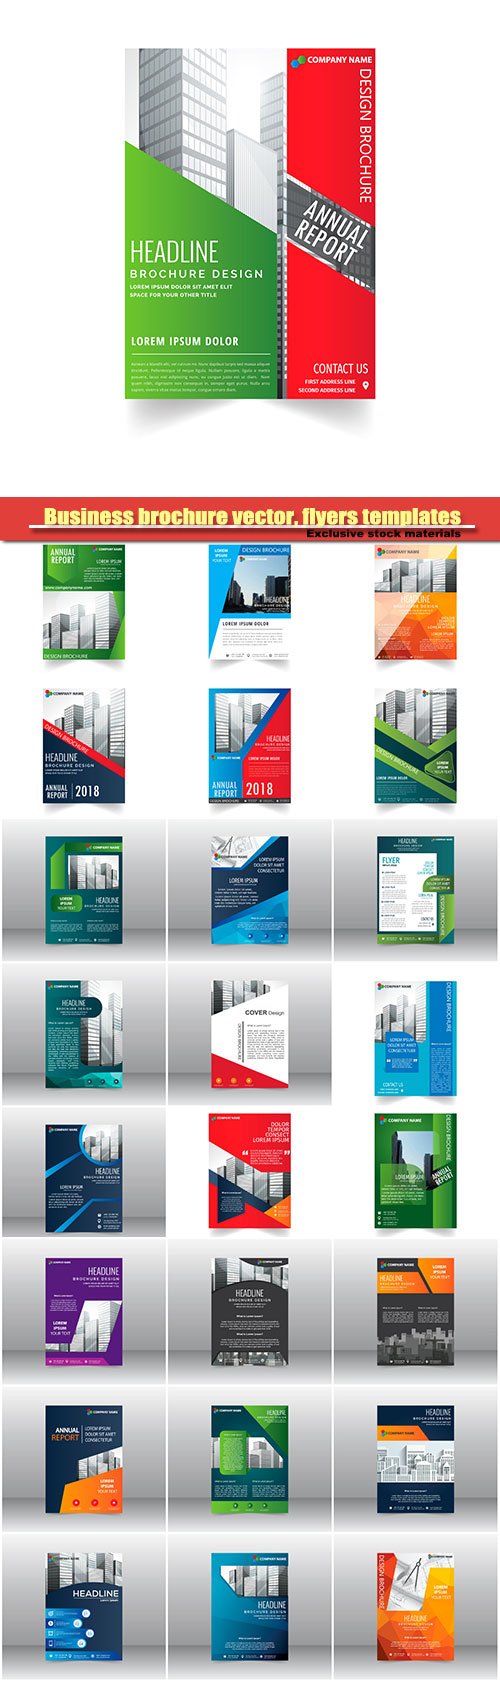 Business brochure vector, flyers templates #15